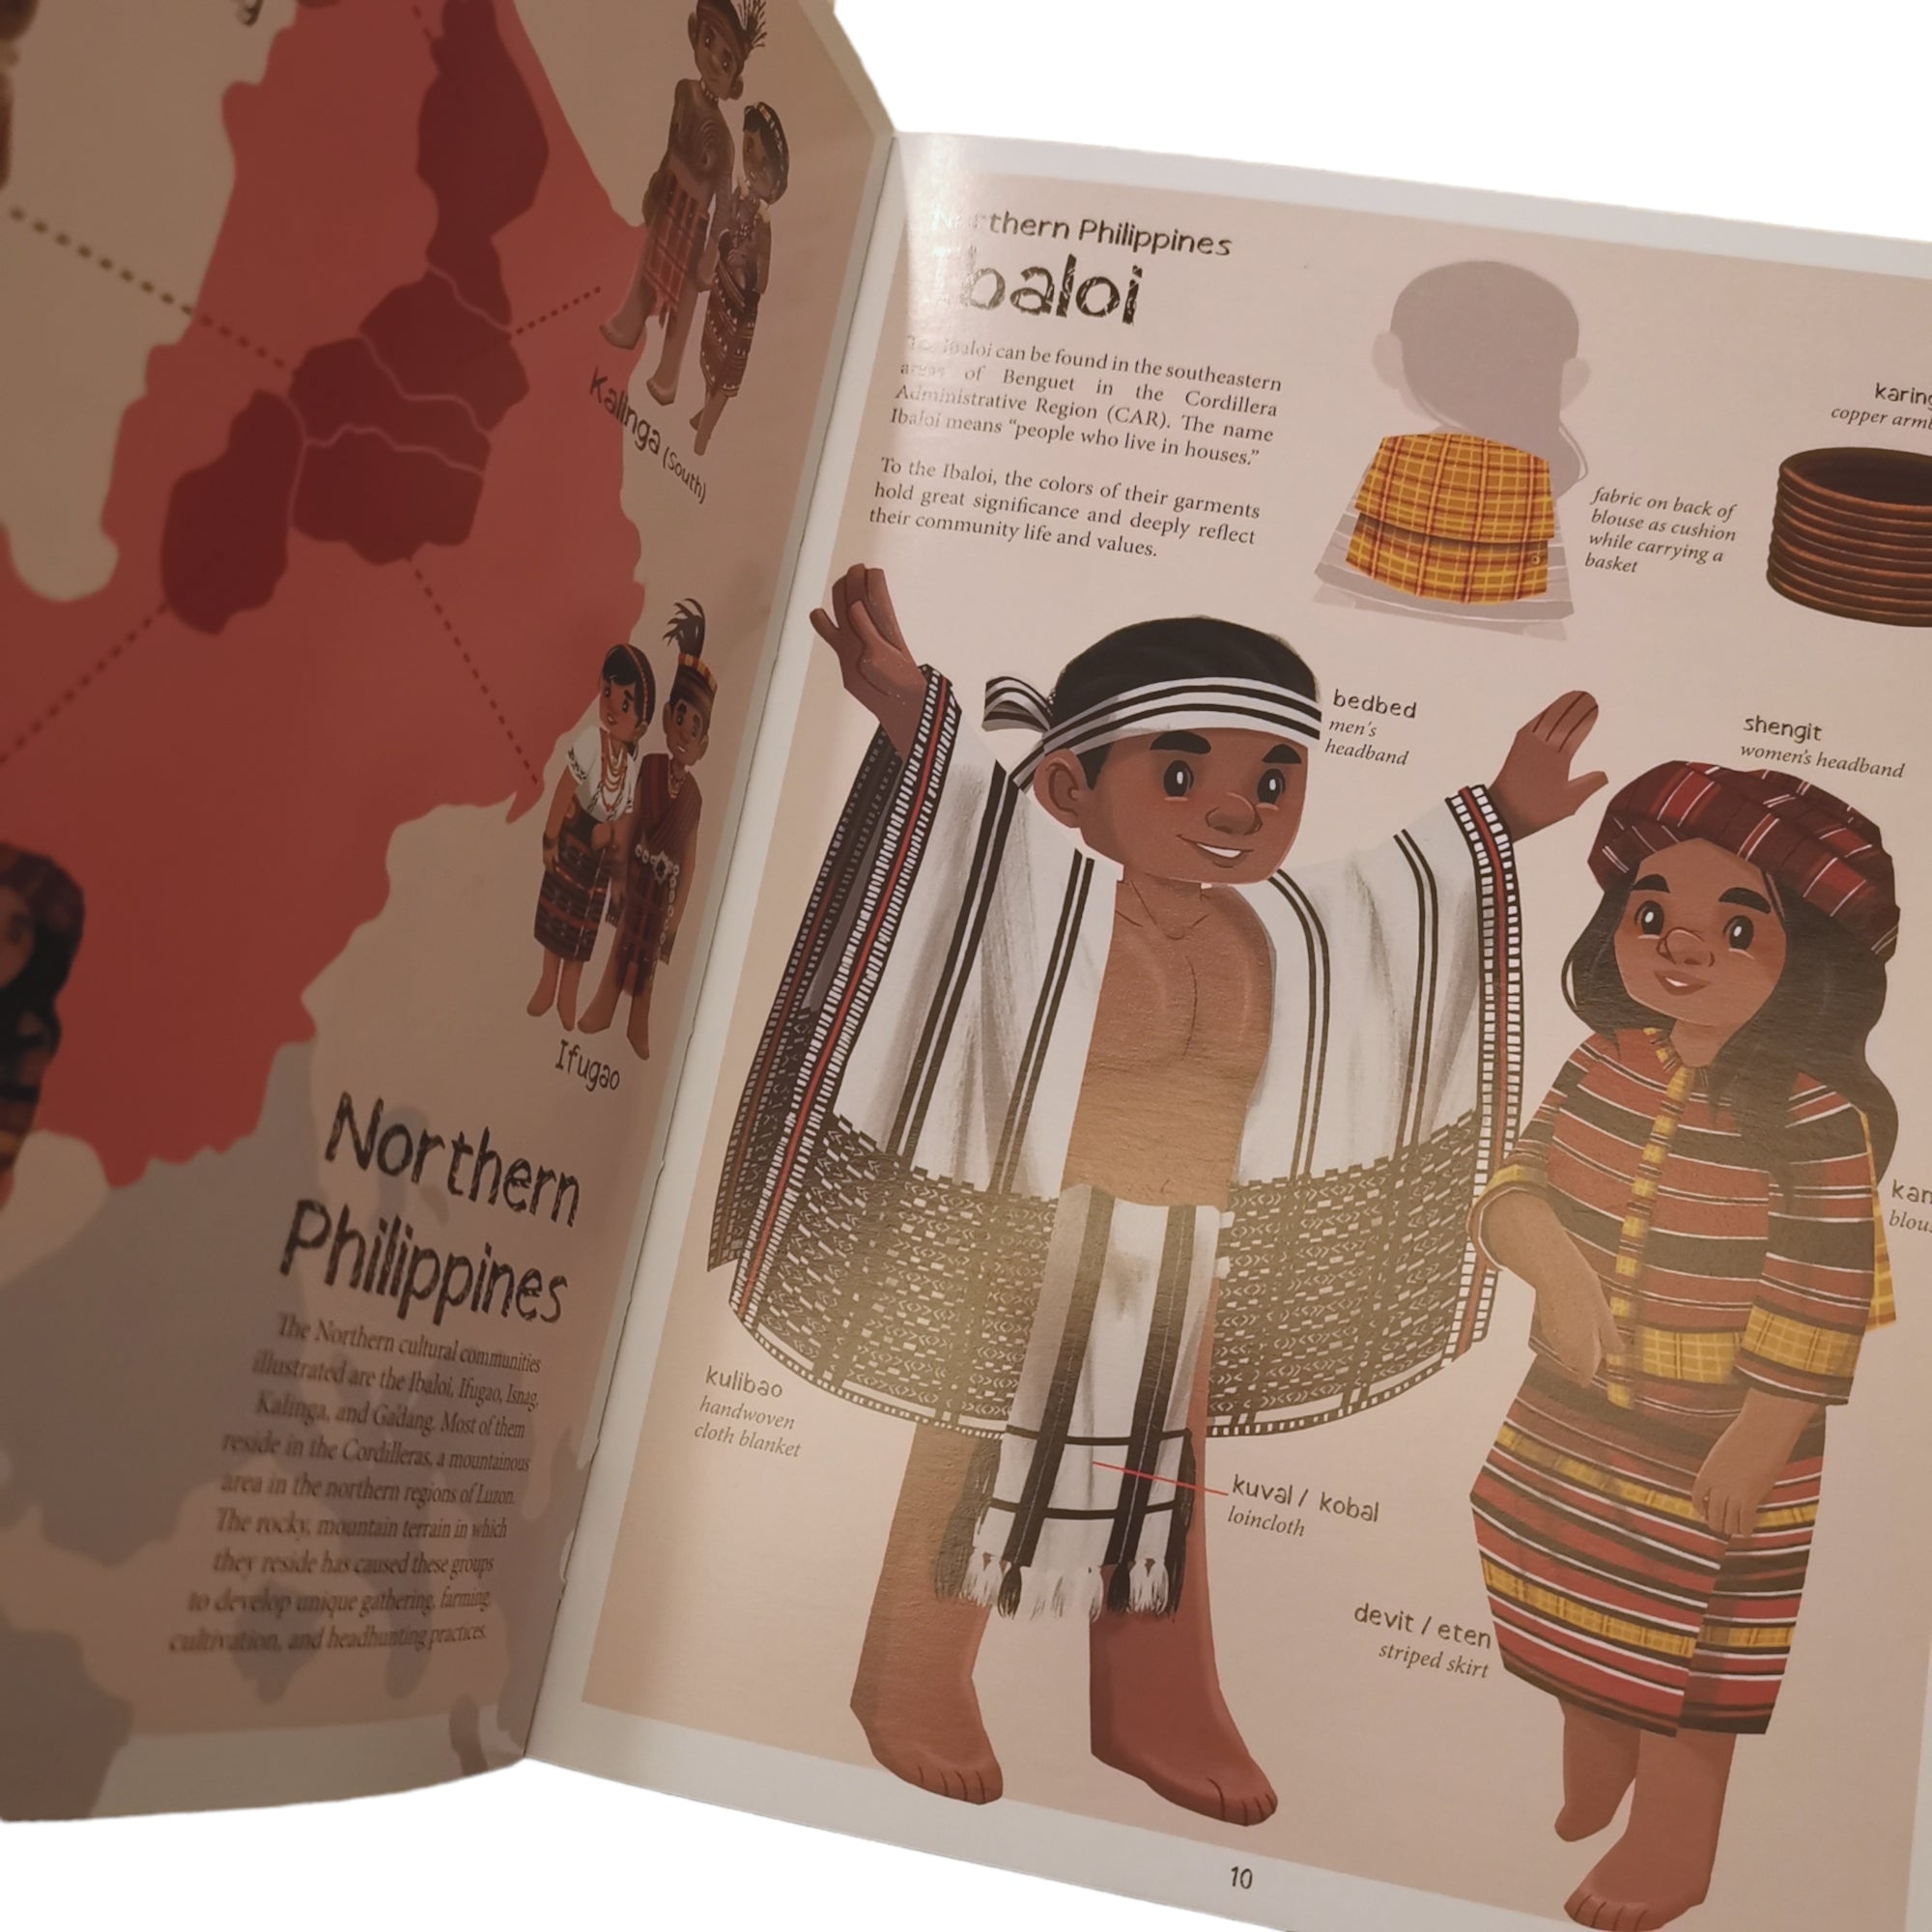 BARONG WAREHOUSE - VMWB1 - PANANAMIT - An Illustrated Guide to Philippine Indigenous Attire | by: Jme Foronda - Filipino Fashion Book